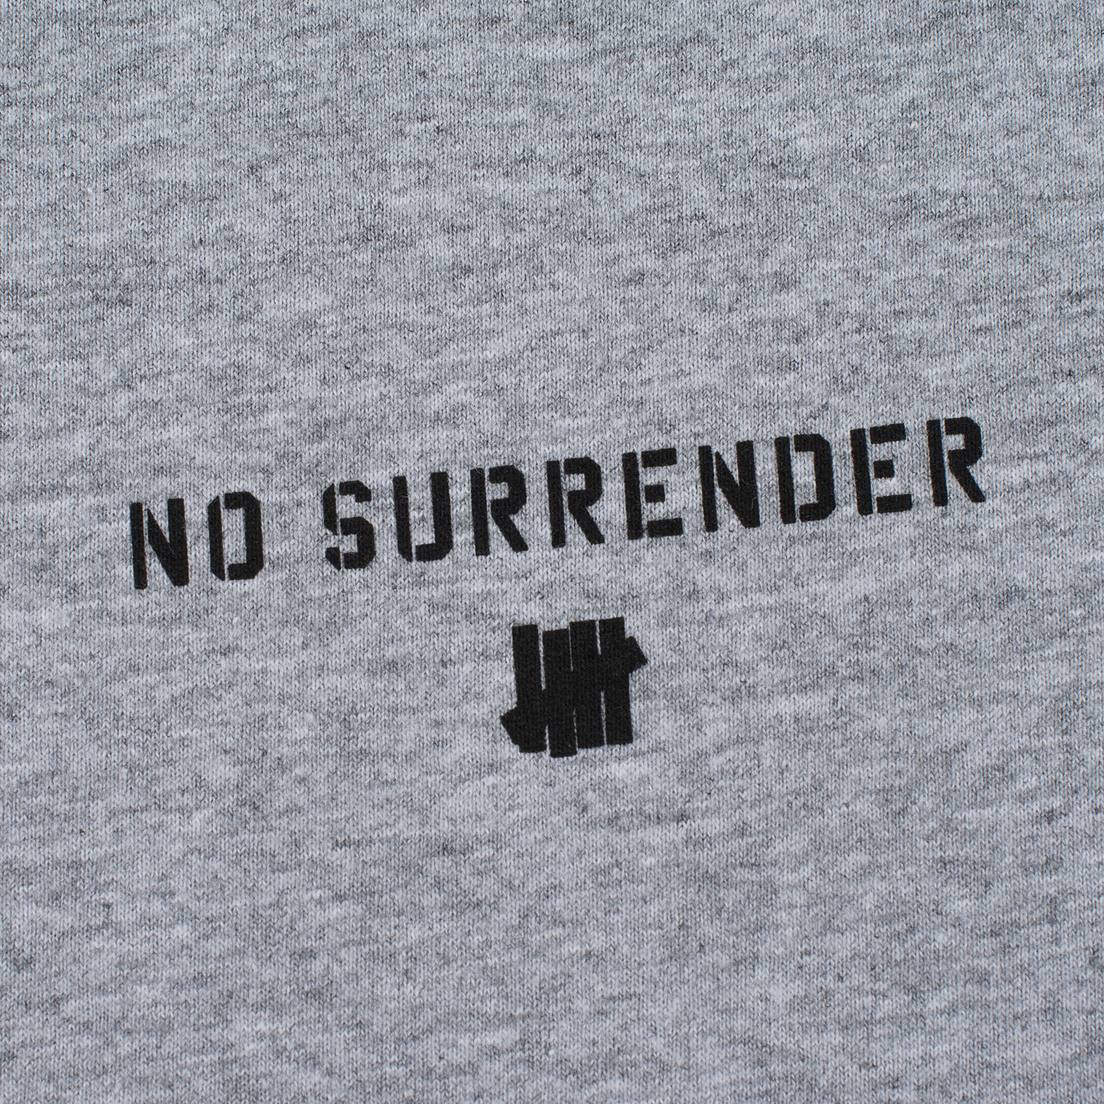 Undefeated Мужская футболка No Surrender